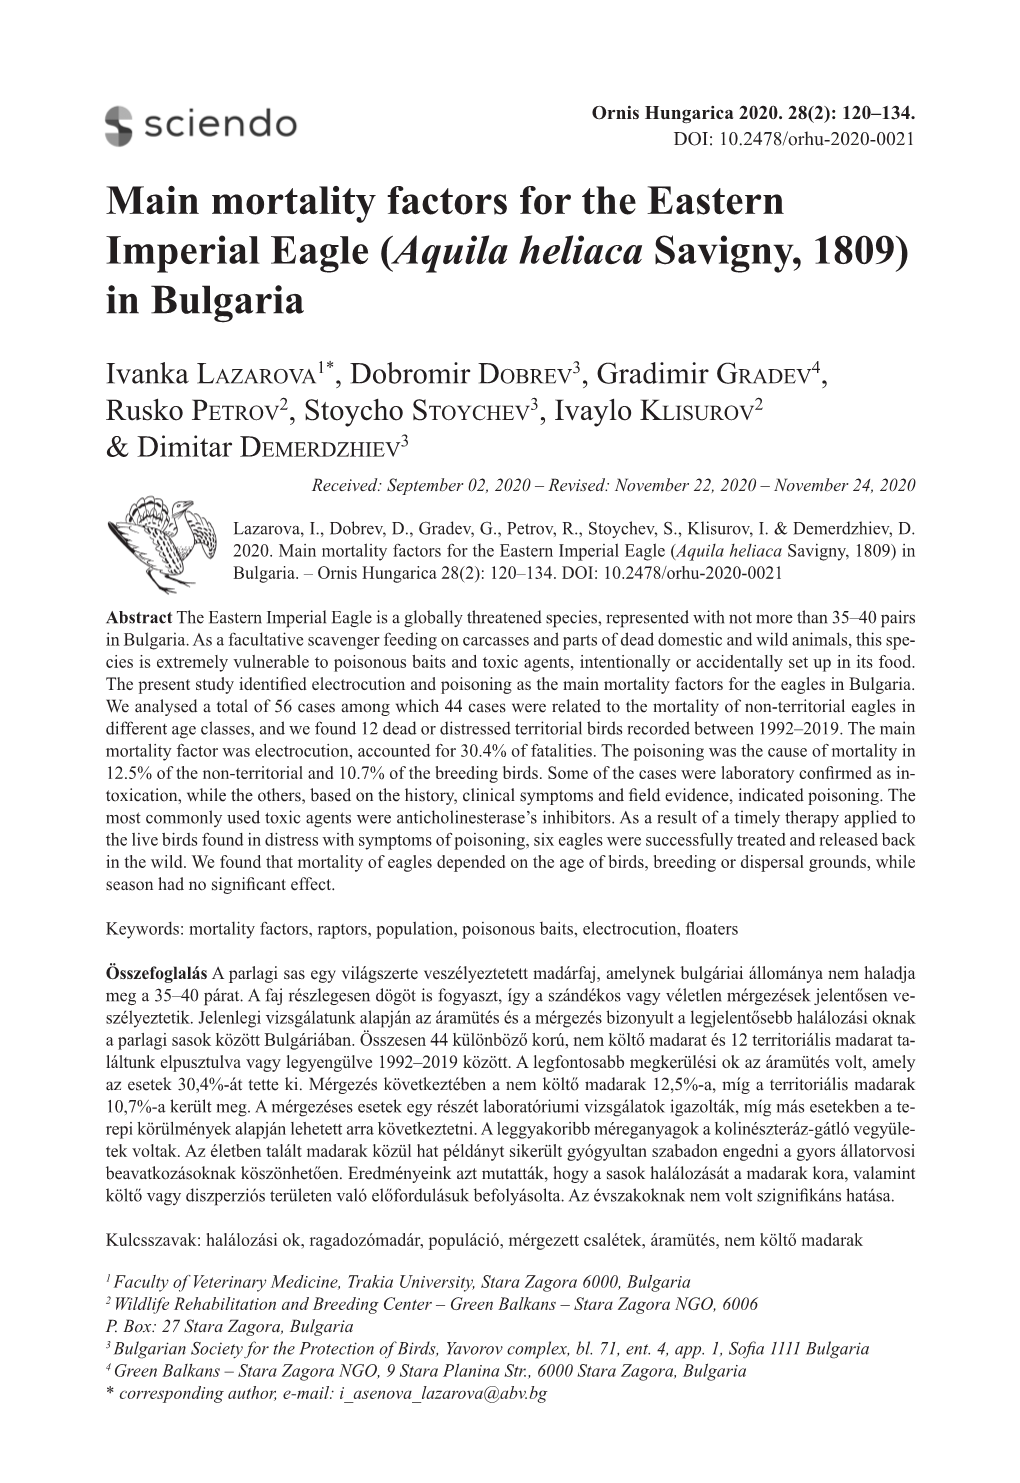 Mortality Factors for the Eastern Imperial Eagle (Aquila Heliaca Savigny, 1809) in Bulgaria